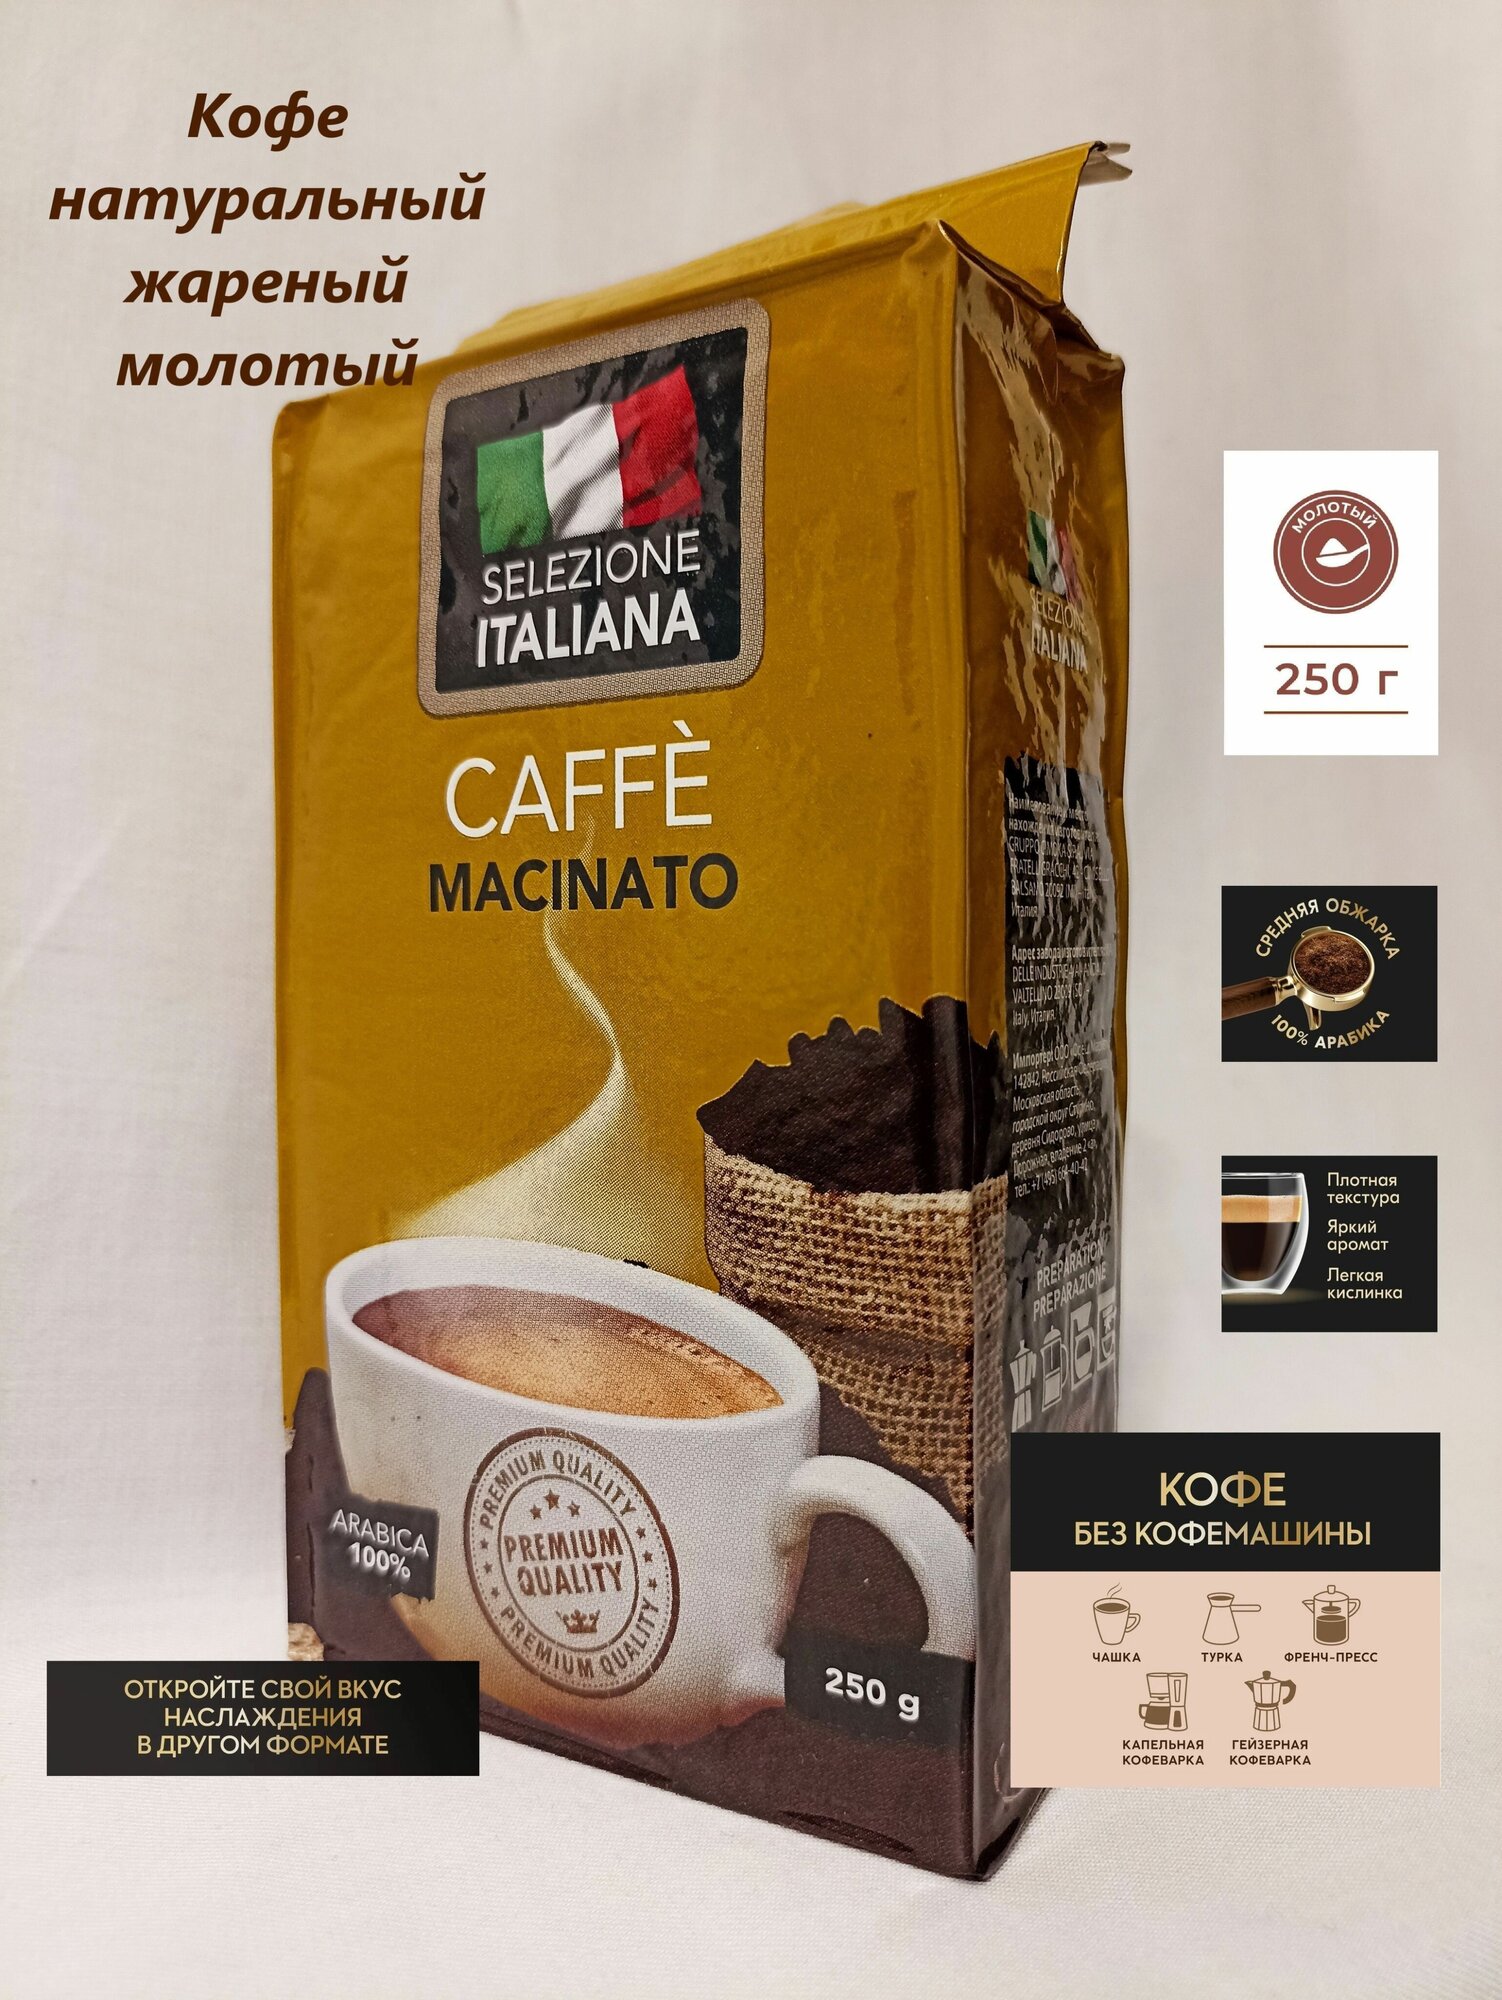 Кофе молотый 250 г Арабика 100% (Италия) Selezione ITALIANA CAFFE MACINATO, кофе натуральный жареный молотый 250 грамм - фотография № 2